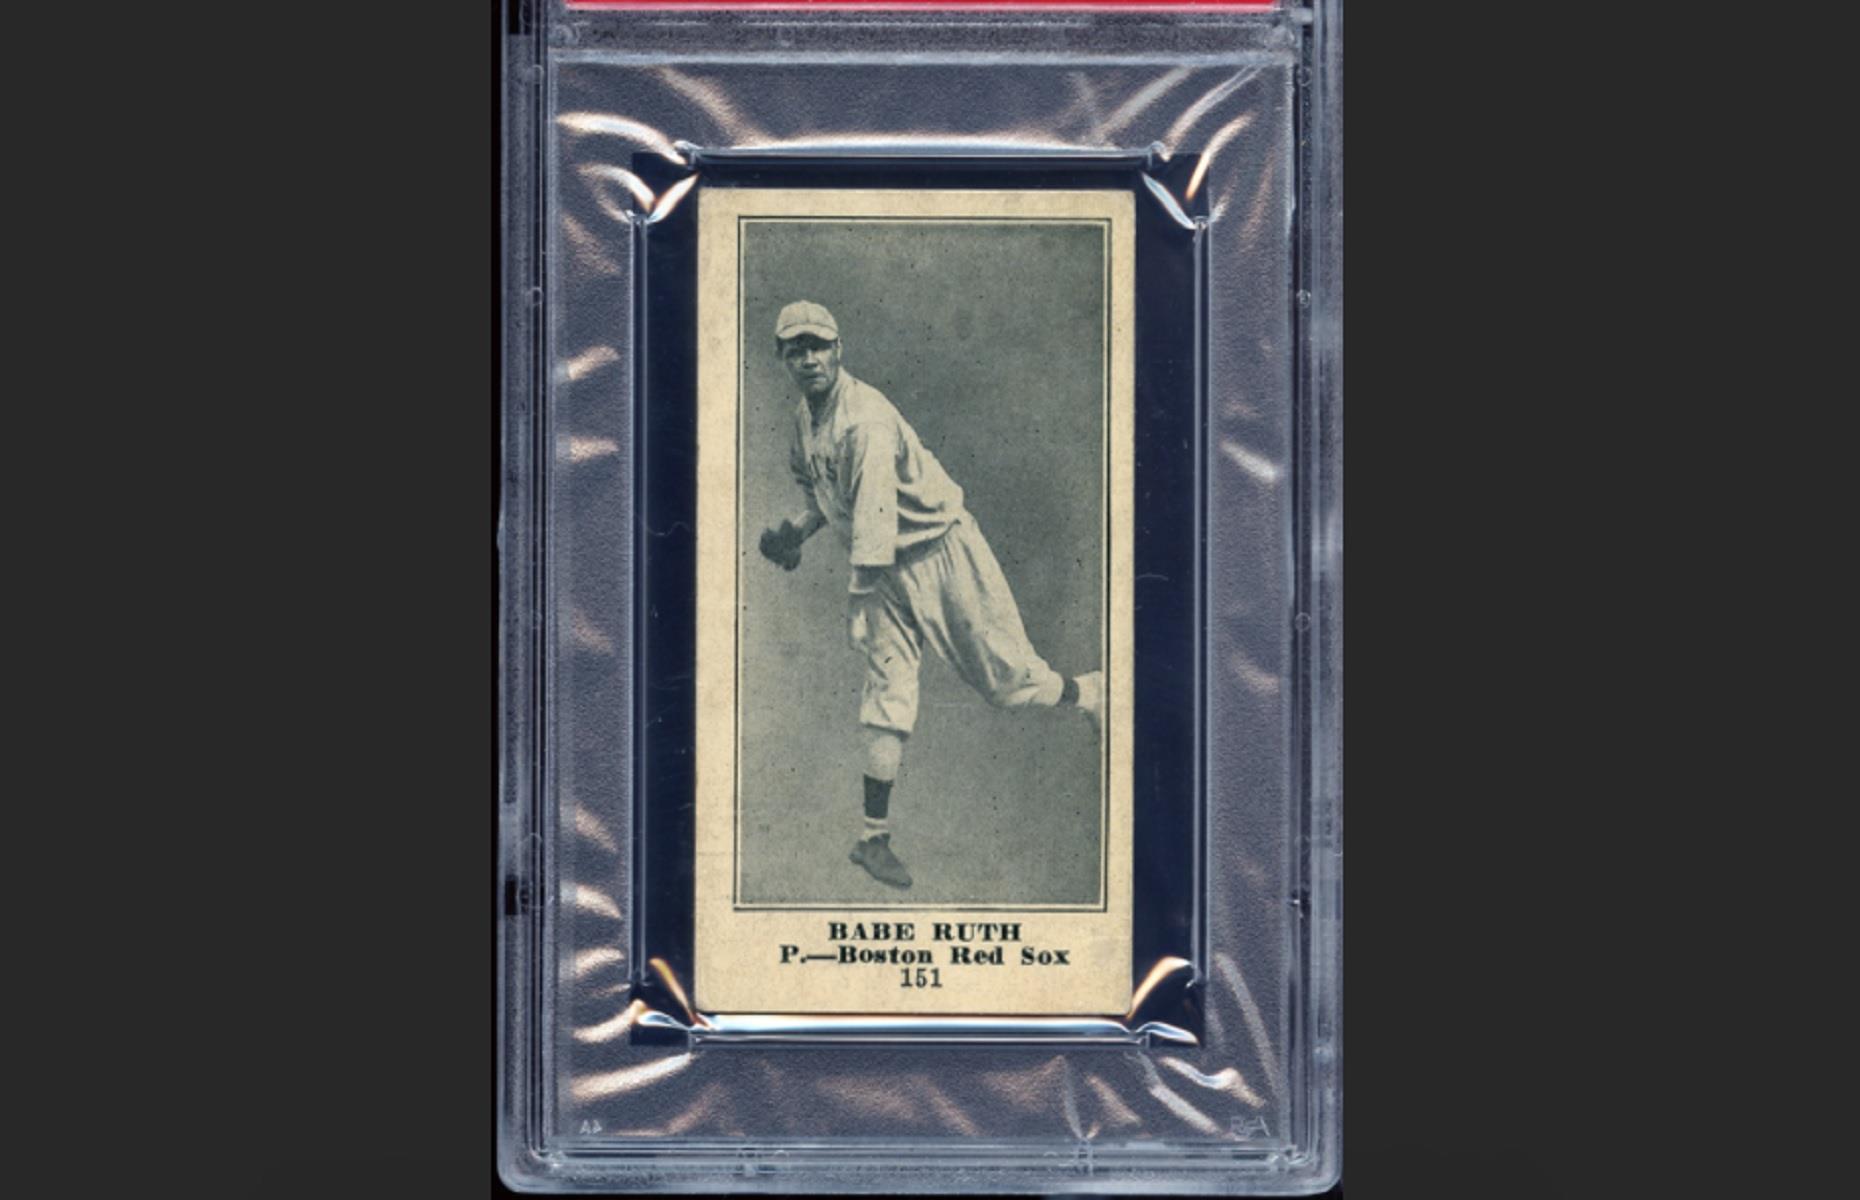 Babe Ruth sports card: $2.46 million (£1.8m)